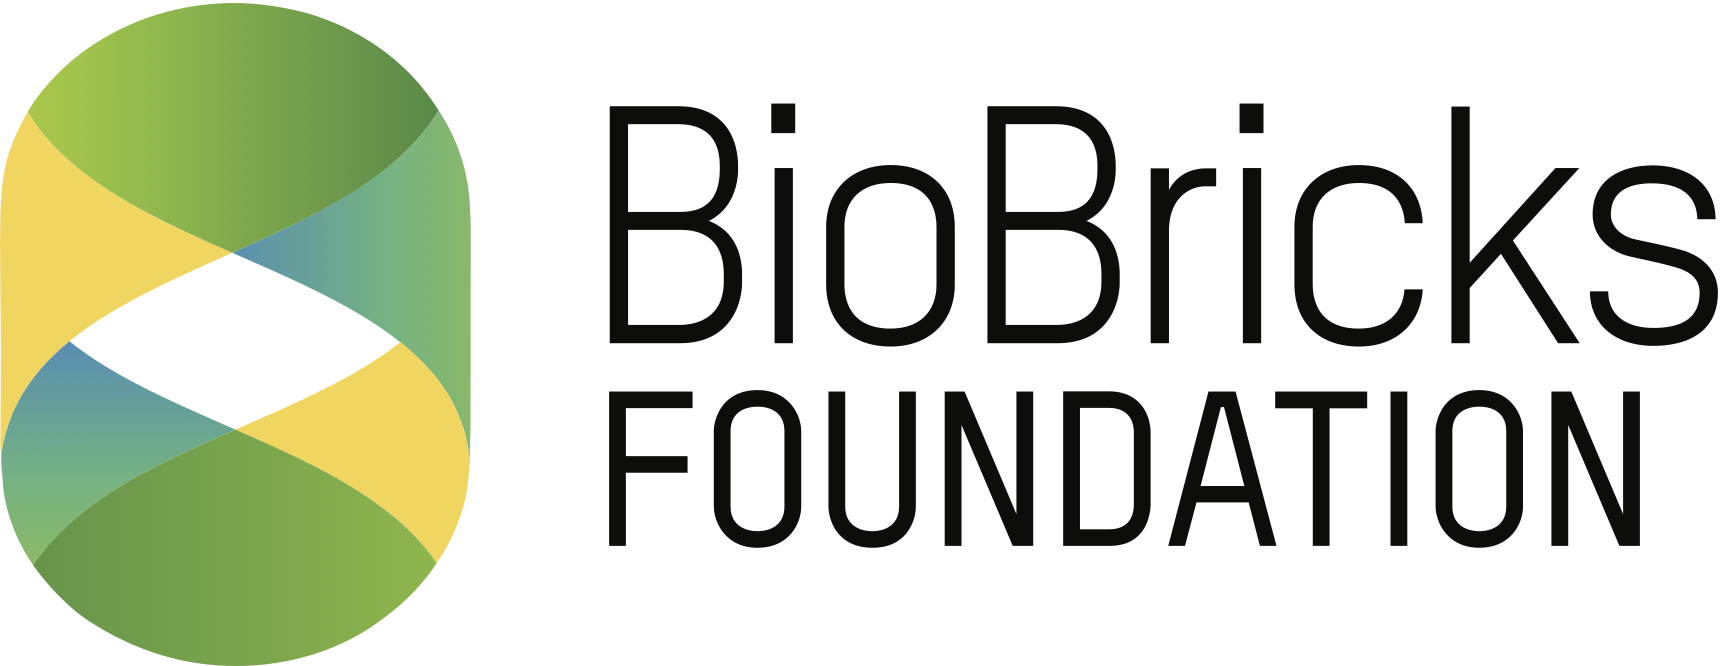 T--BioBricks--BBF Banner.png